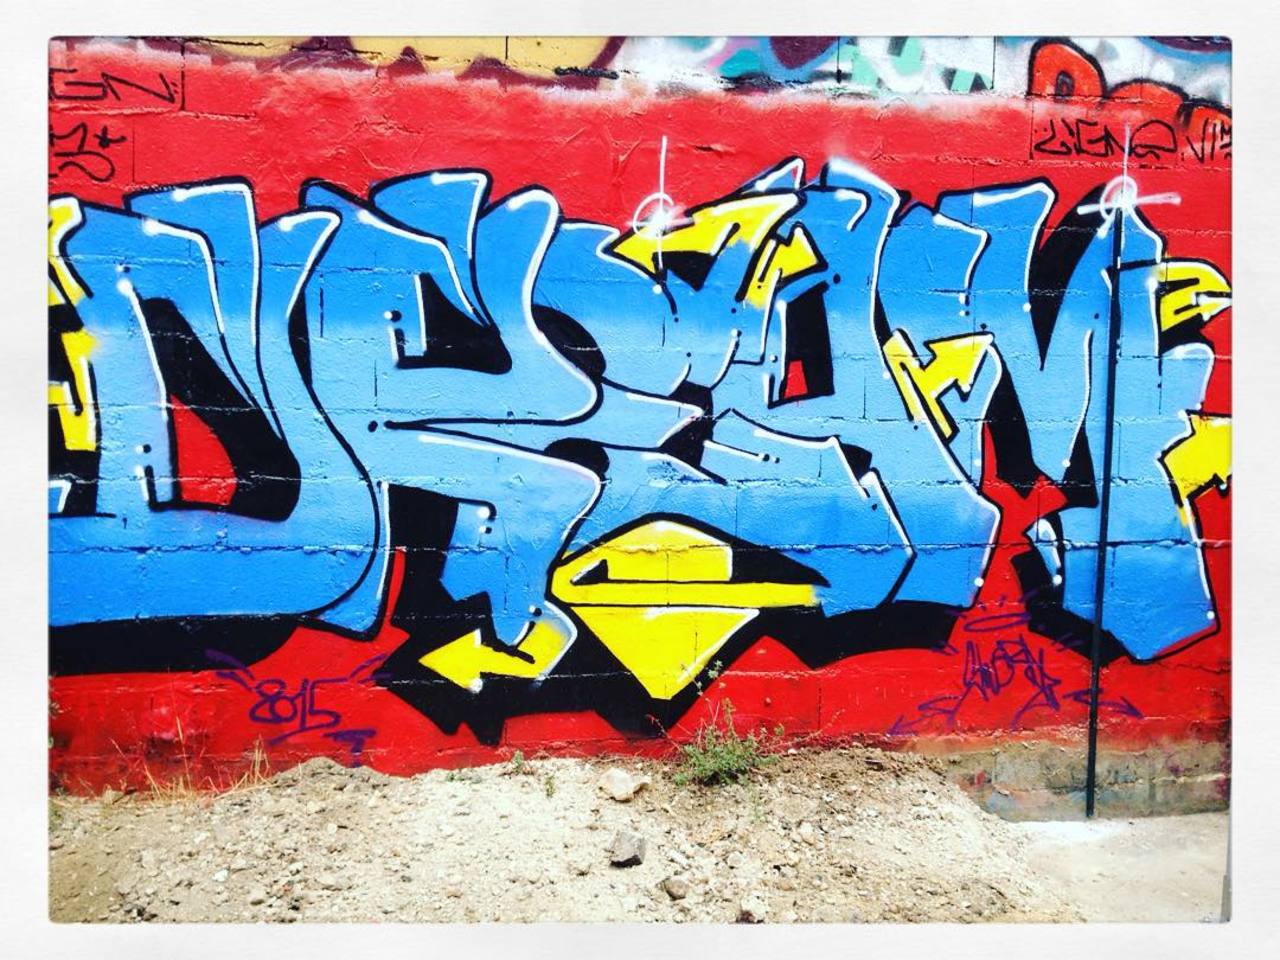 #Paris #graffiti photo by @cibti4987 http://ift.tt/1LebY3k #StreetArt http://t.co/zPsll8adZU